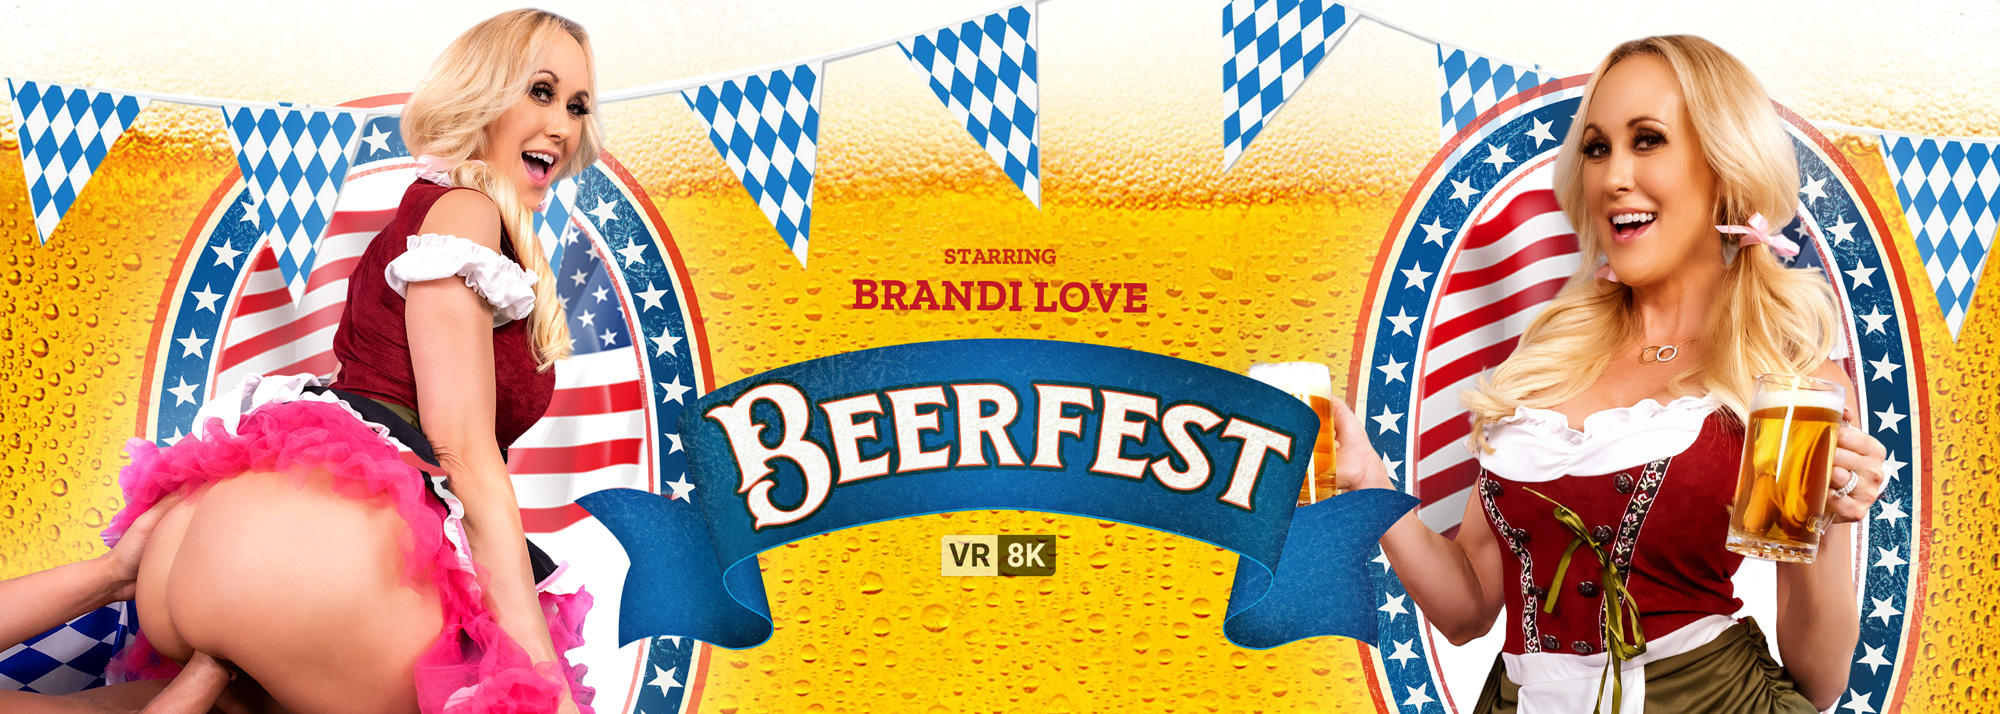 Beerfest - VR Porn Video, Starring: Brandi Love